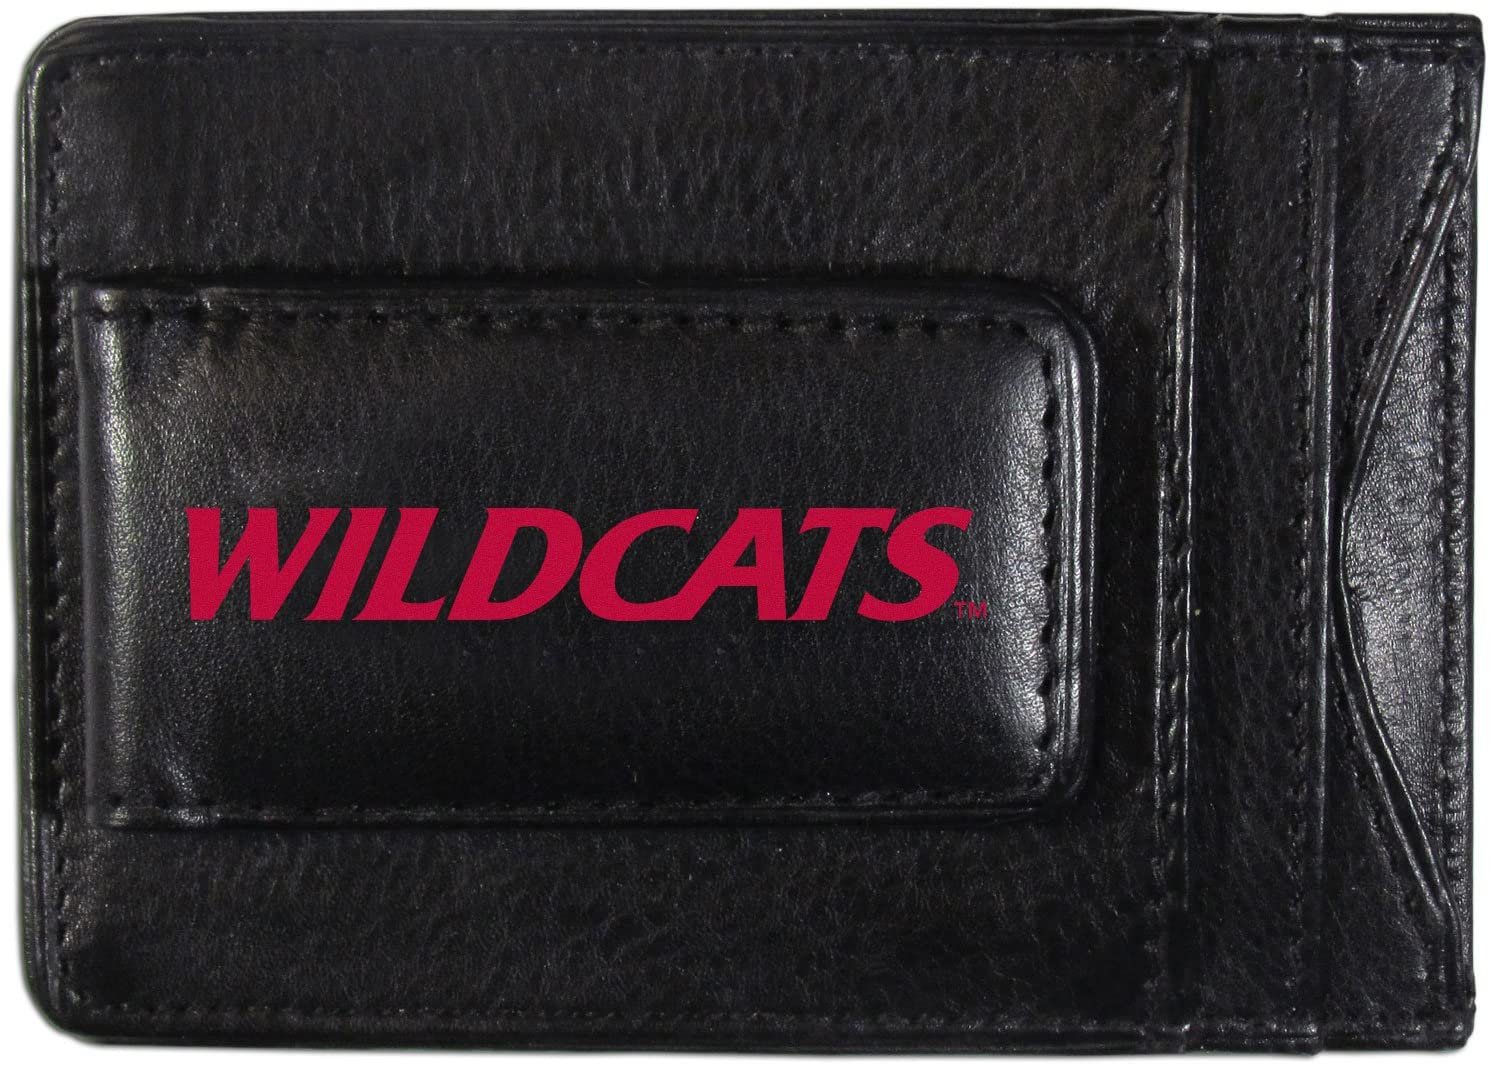 University of Arizona Wildcats Black Leather Wallet, Front Pocket Magnetic Money Clip, Printed Logo